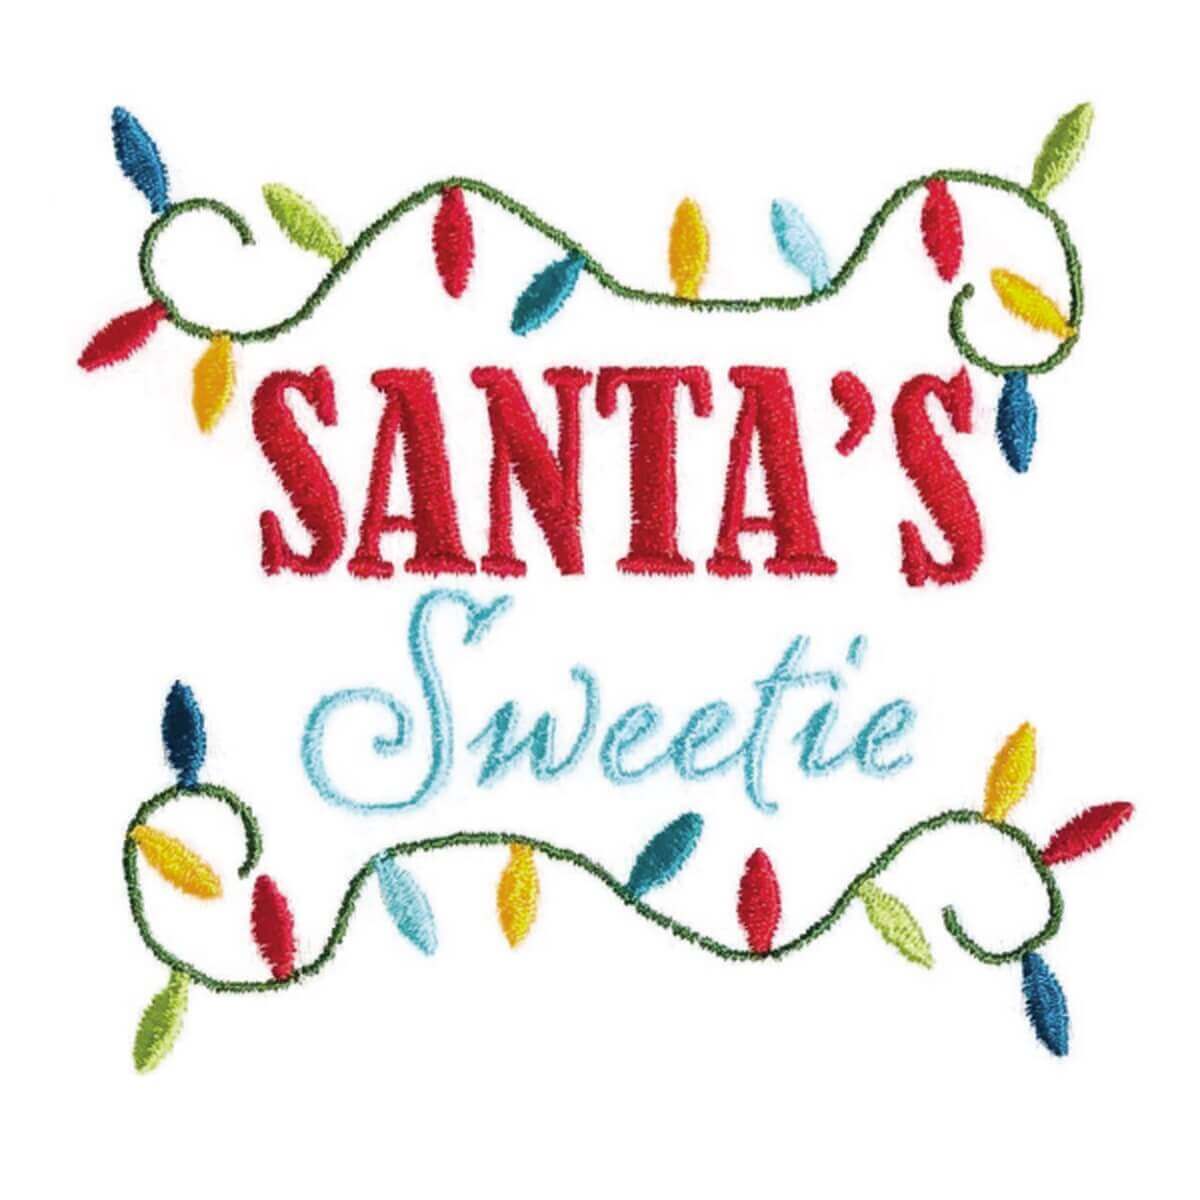 Stickdesign Santa Sayings: Santas Sweetie (Download)